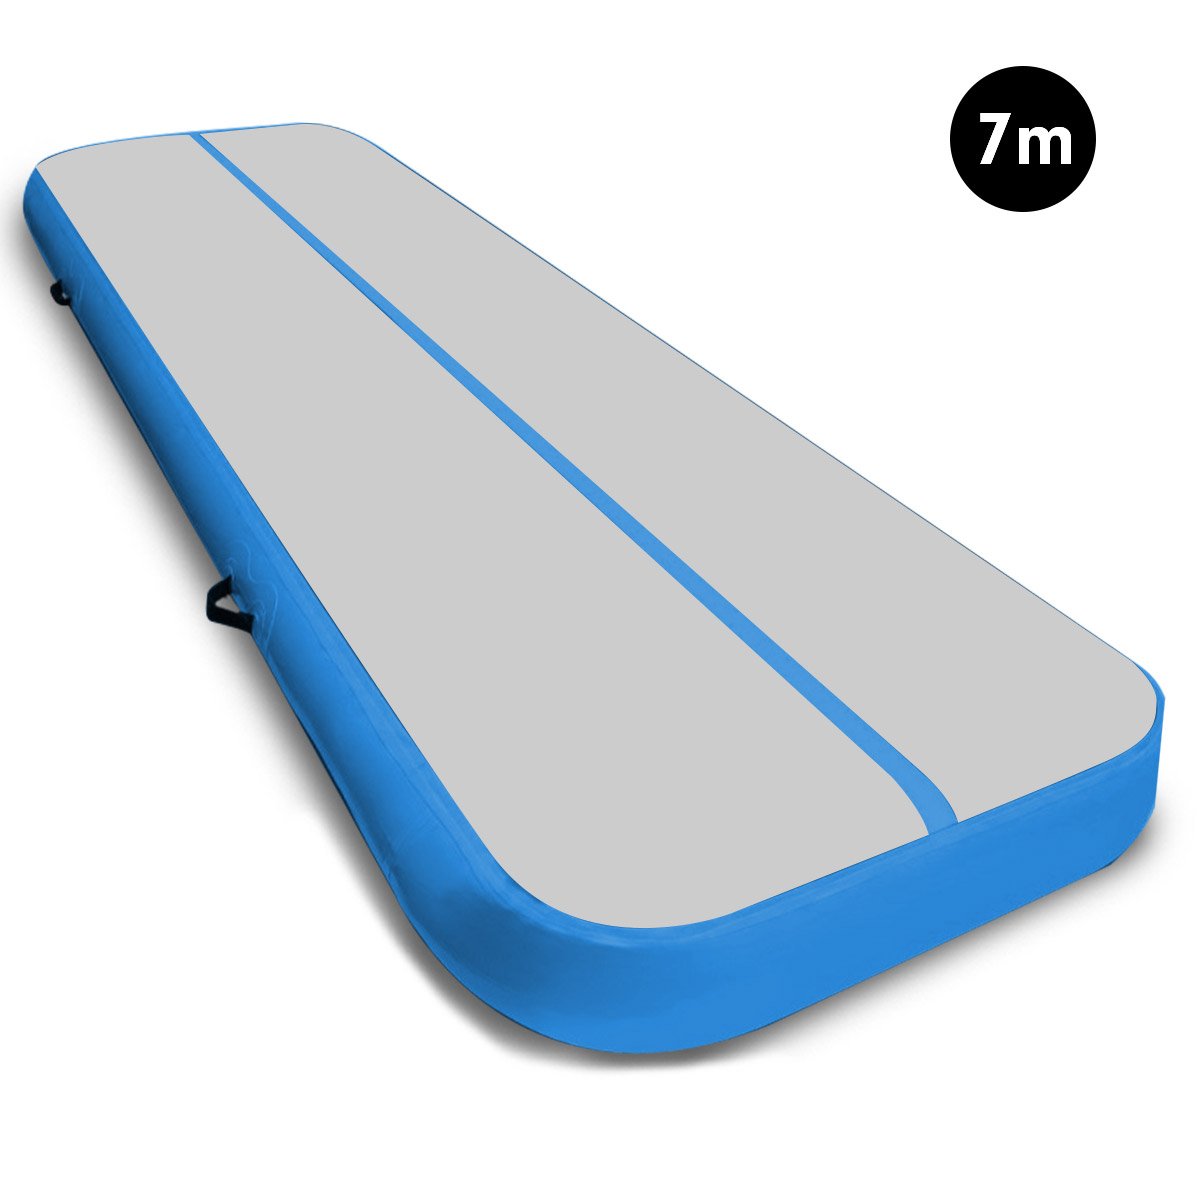 7m x 1m Air Track Inflatable Gymnastics Mat Tumbling - Grey Blue 2